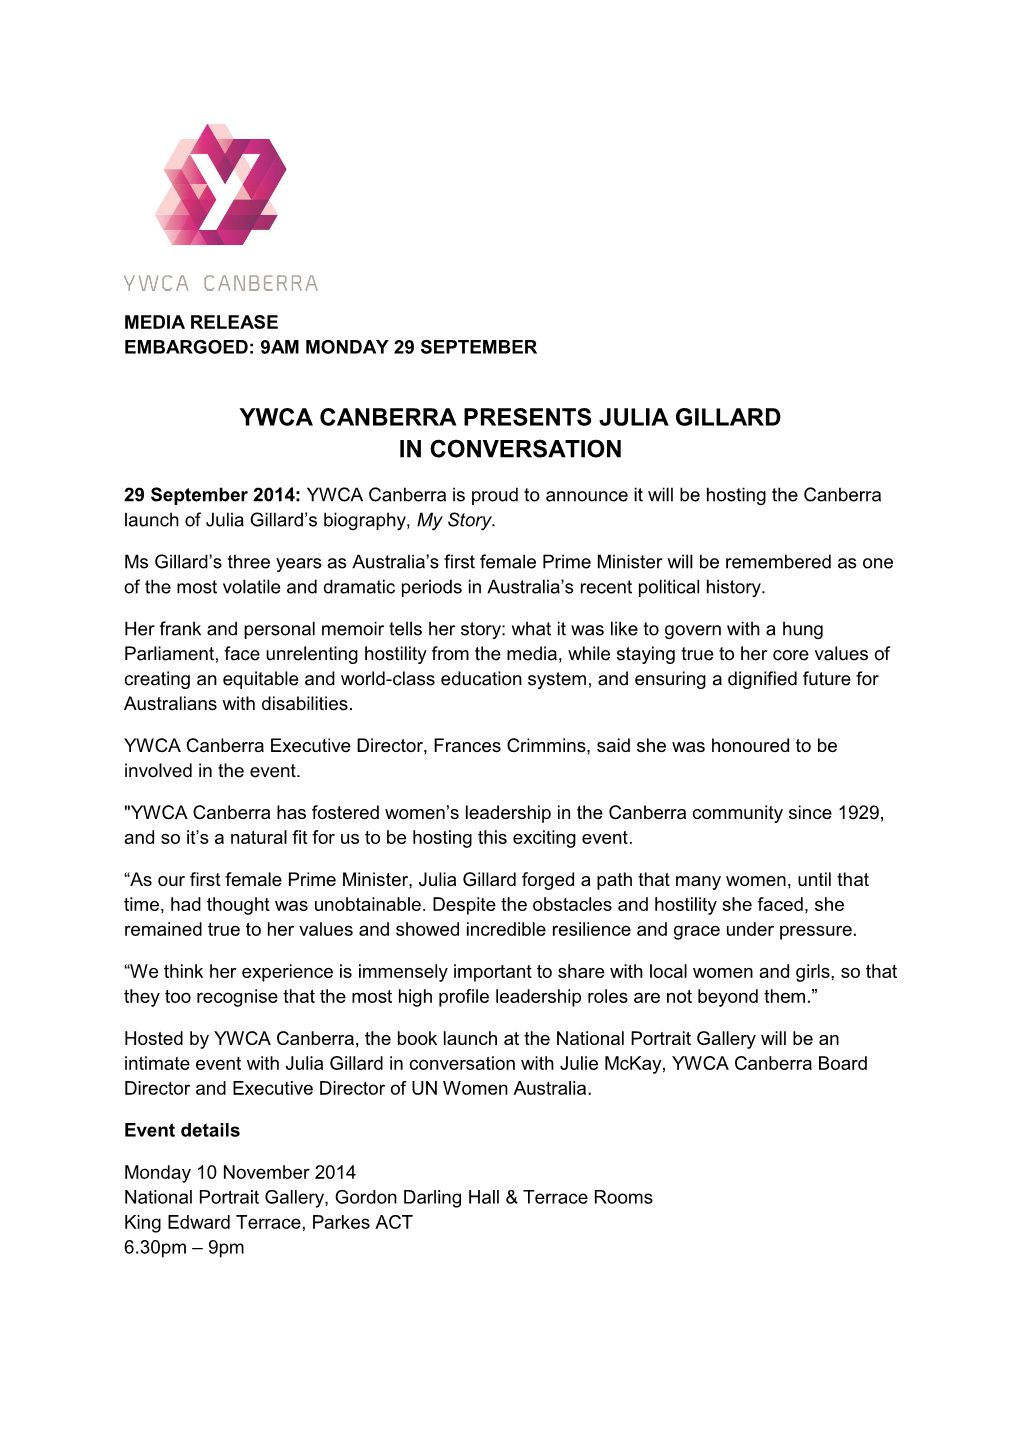 Ywca Canberra Presents Julia Gillard in Conversation